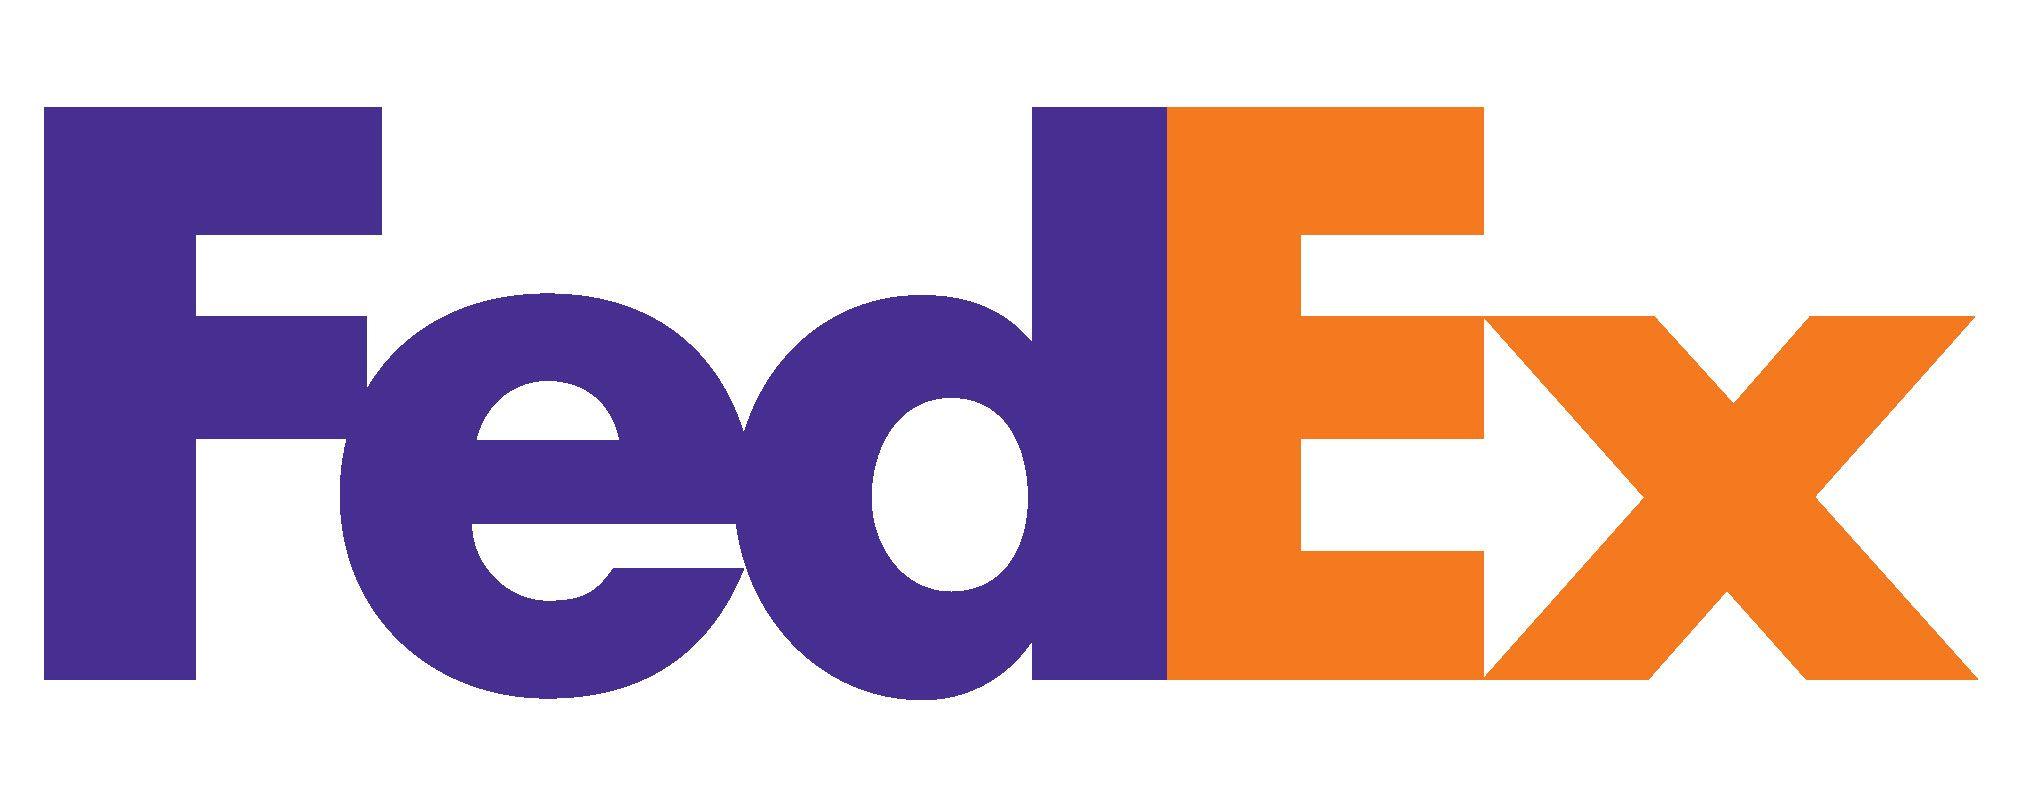 FedEx Home Logo - FedEx. What's That Font?